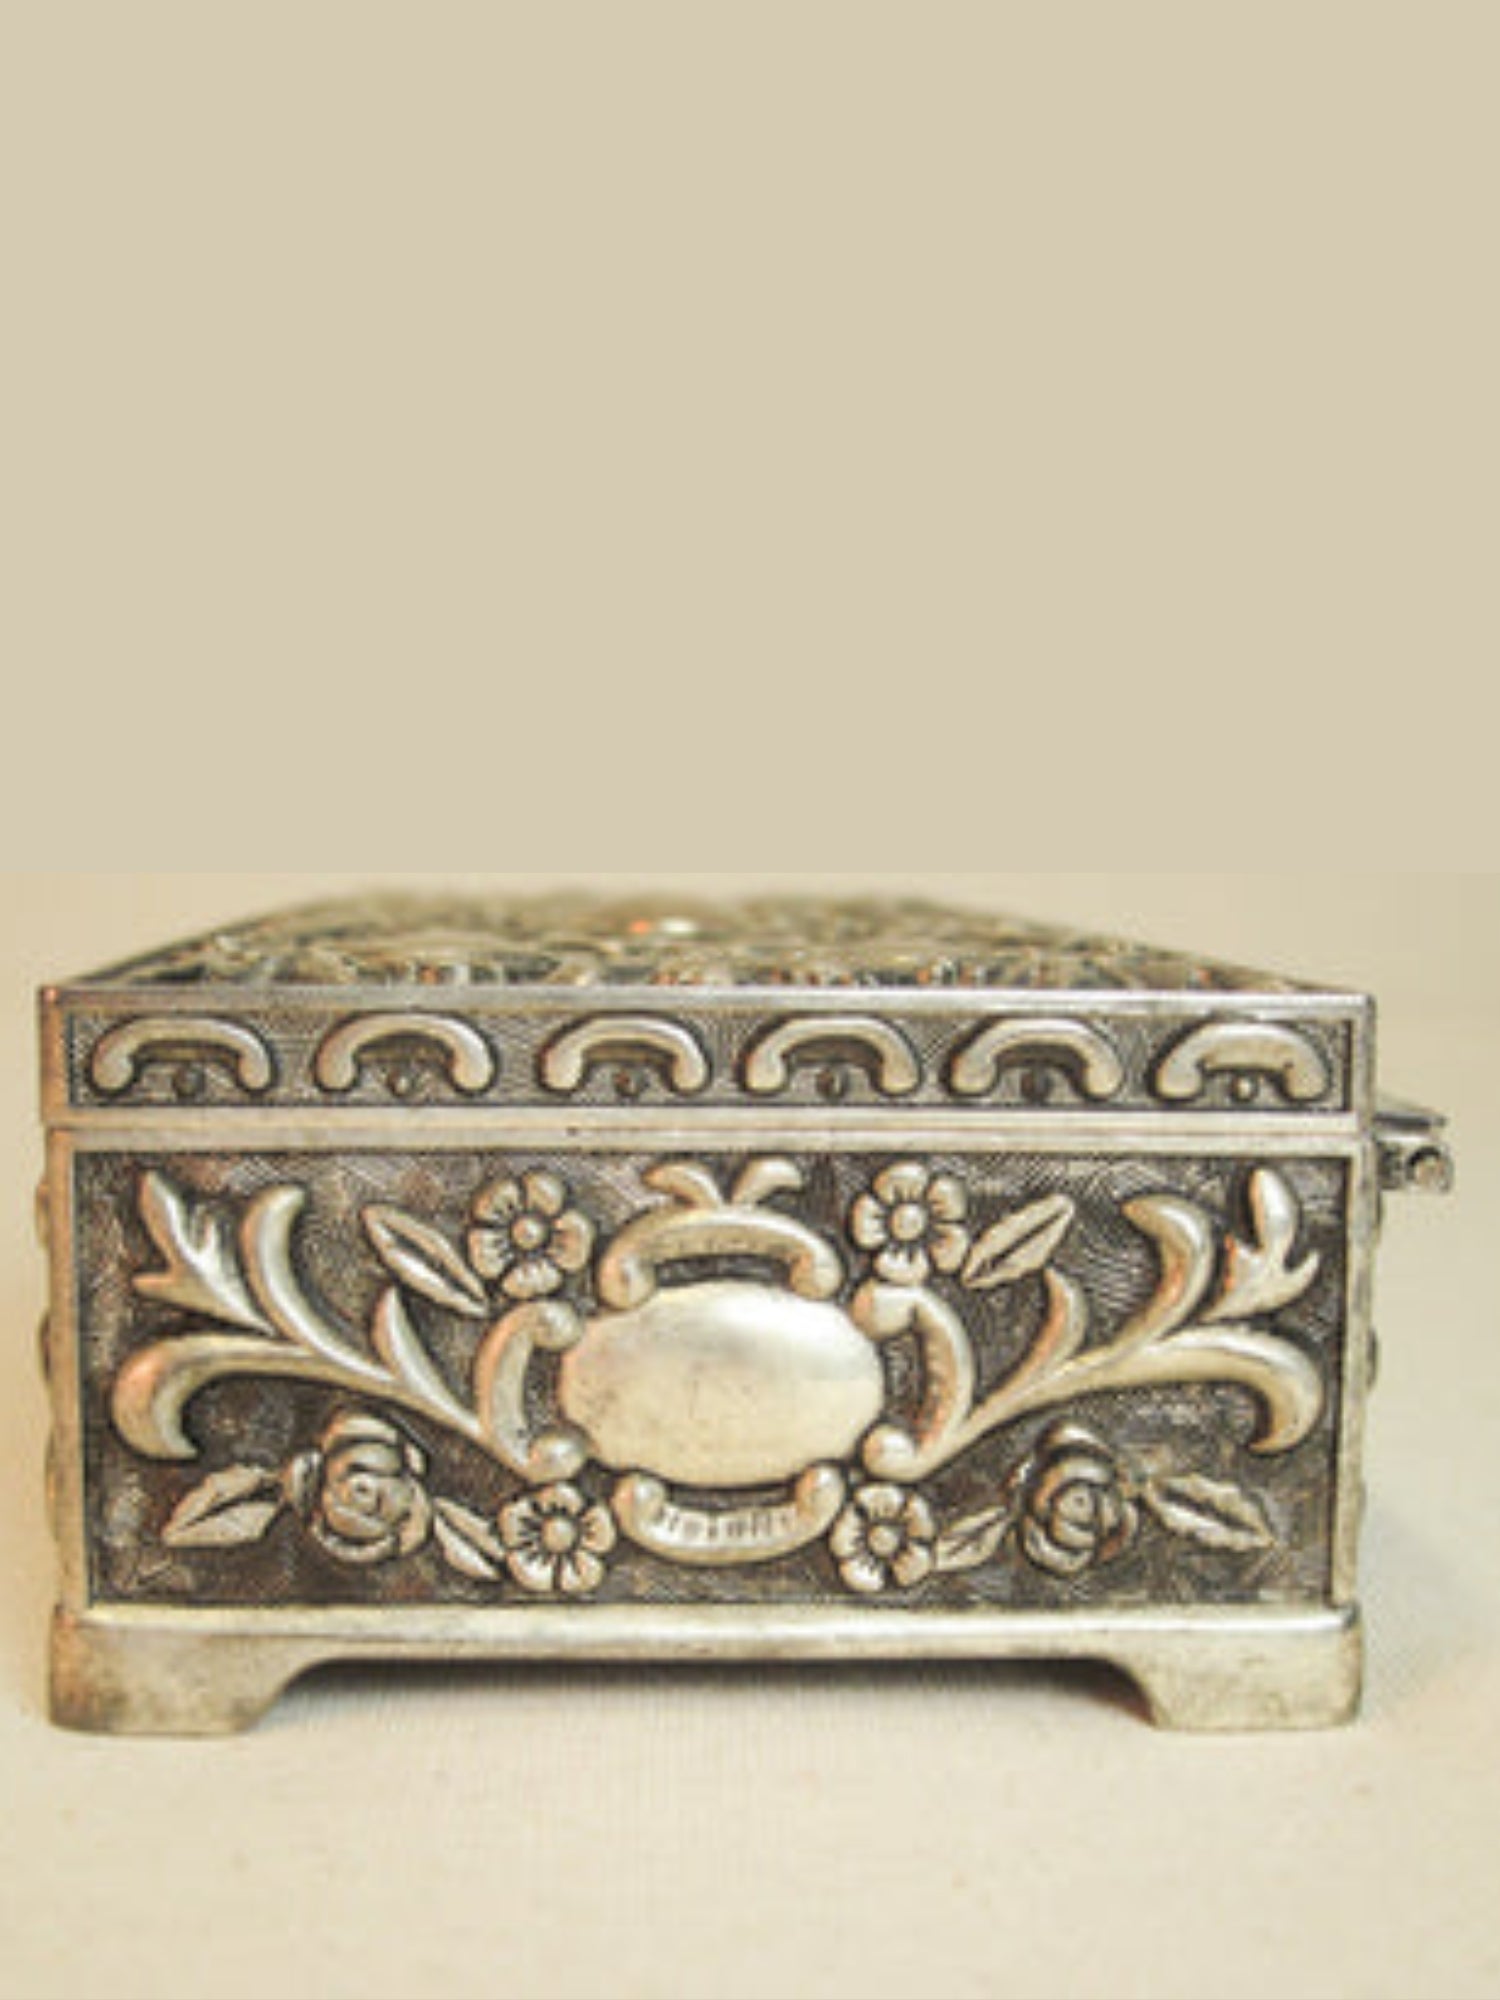 Sadie's silver plated stash box